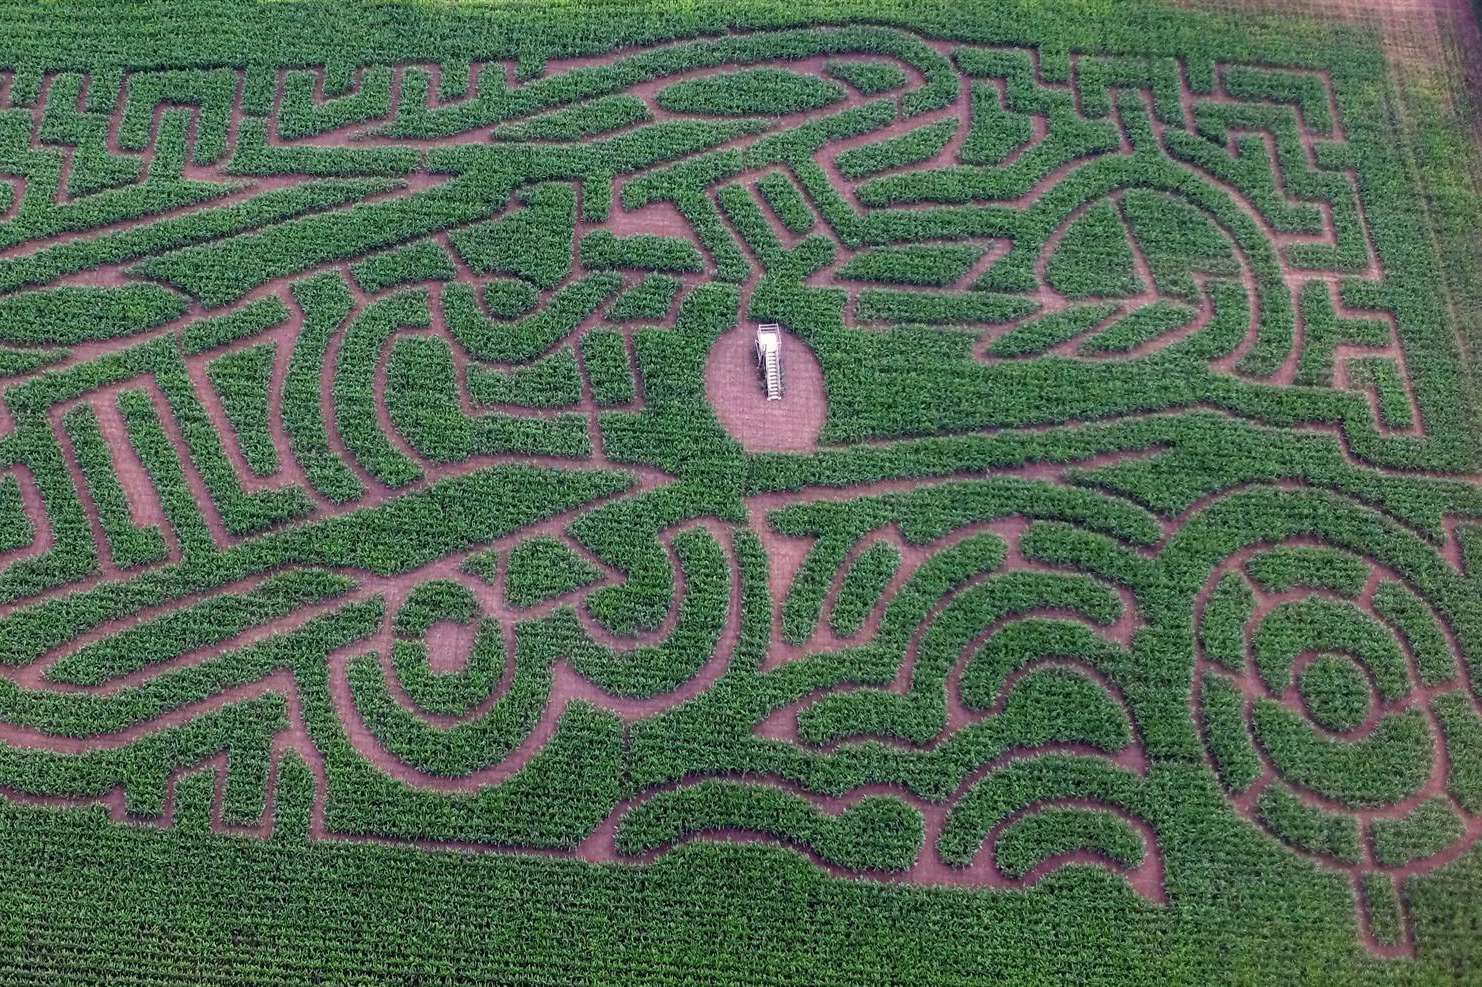 A bird's eye view of this year's Penshurst maize maze